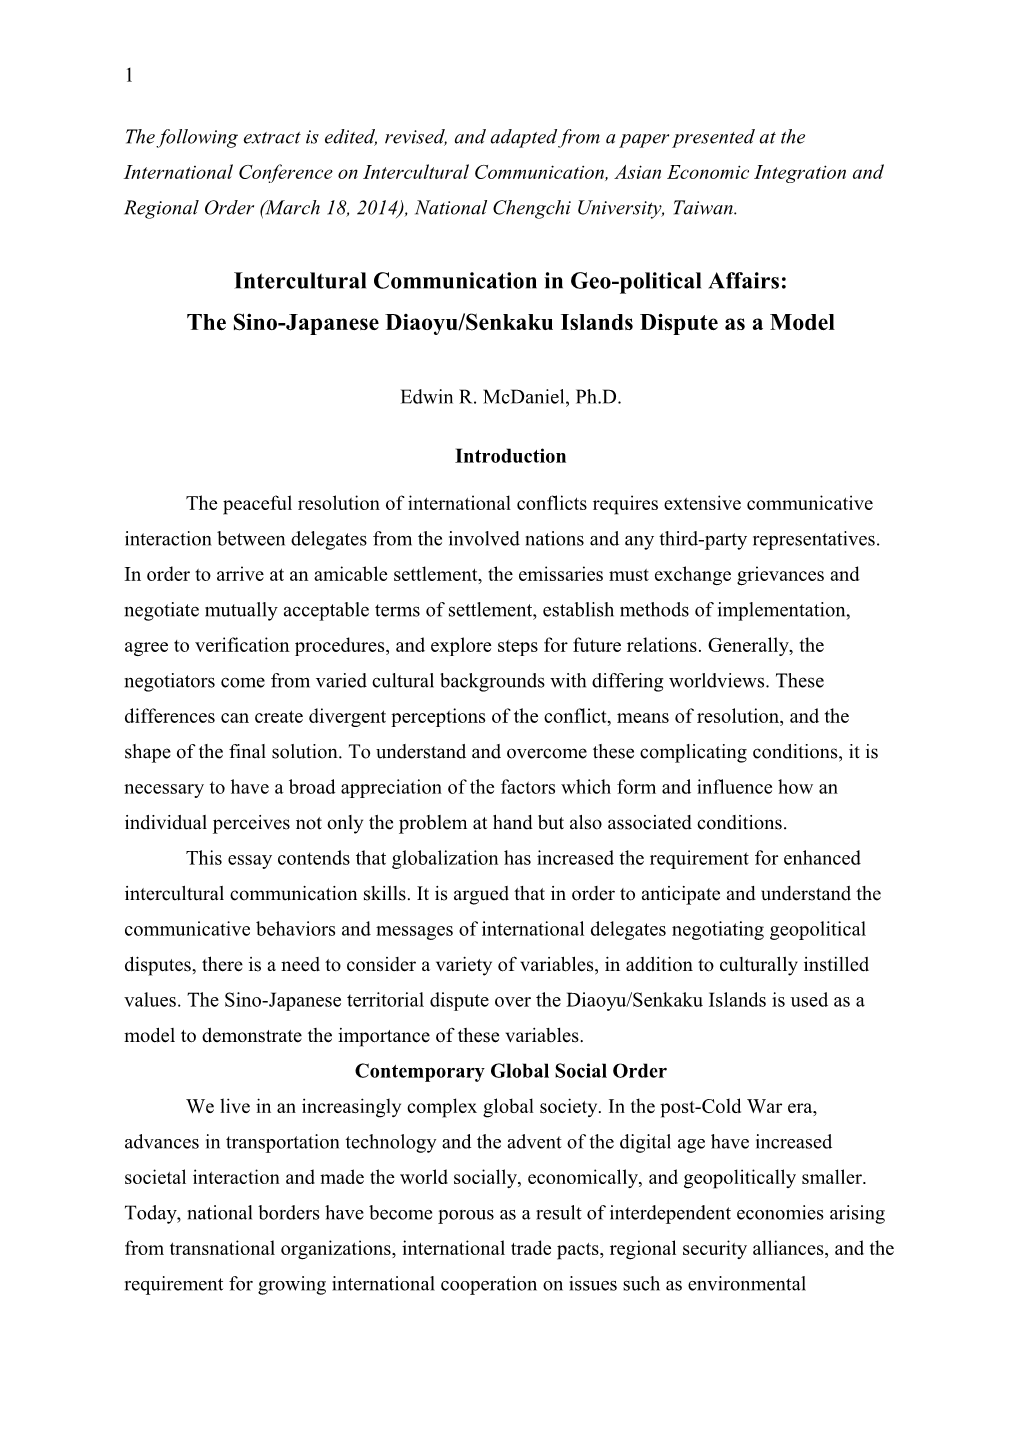 Intercultural Communication in Geo-Political Affairs